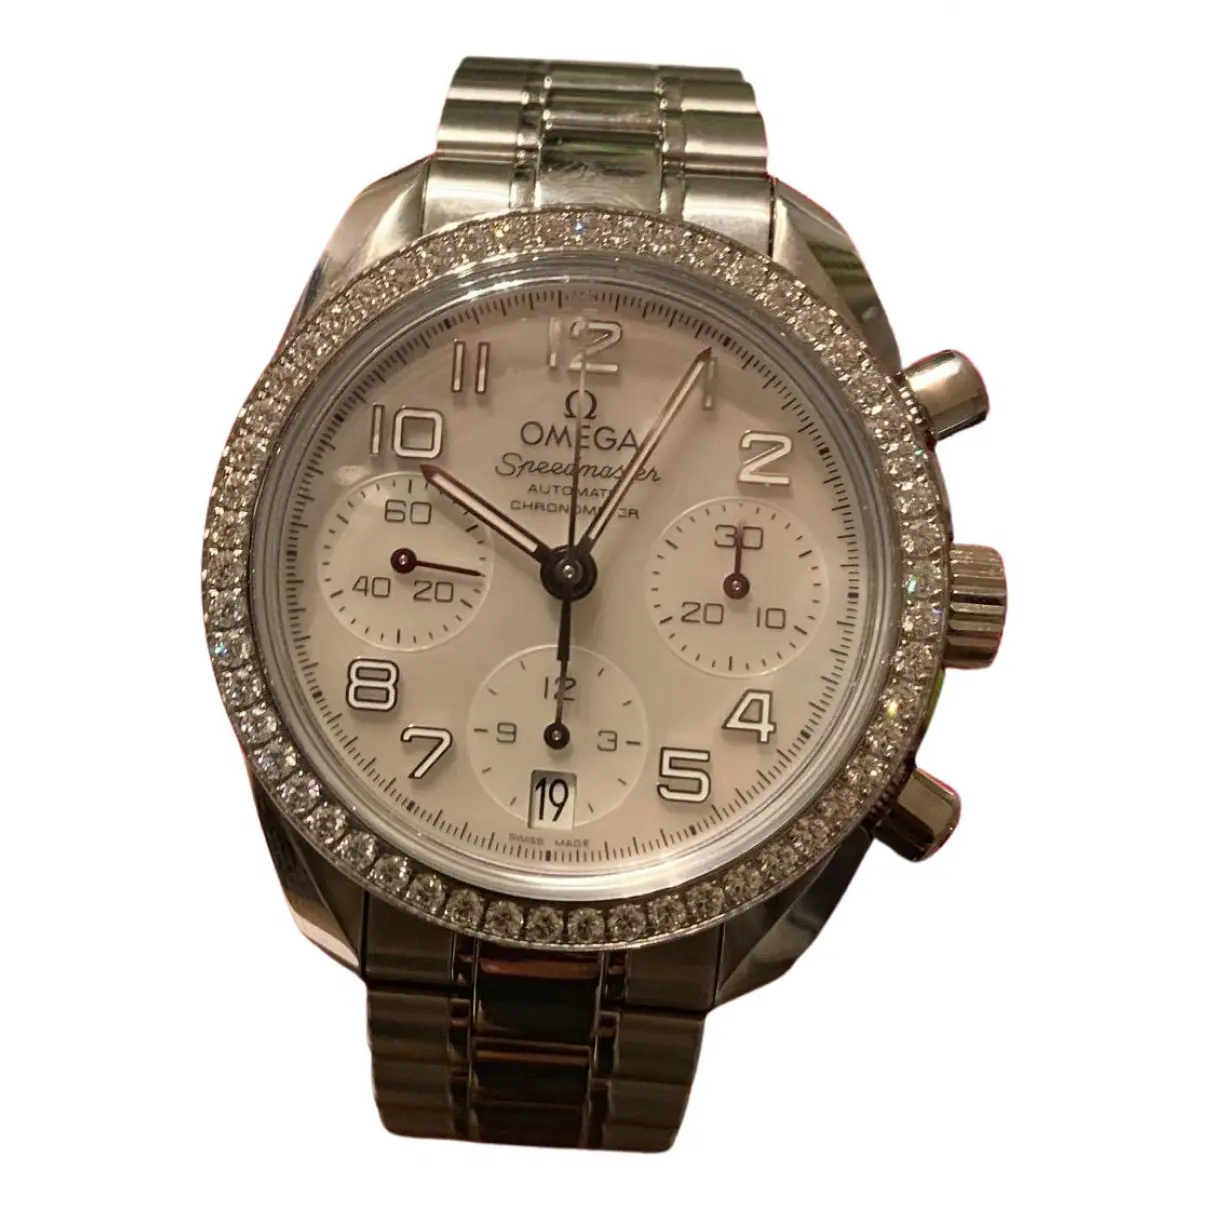 Speedmaster reduced silver watch Omega